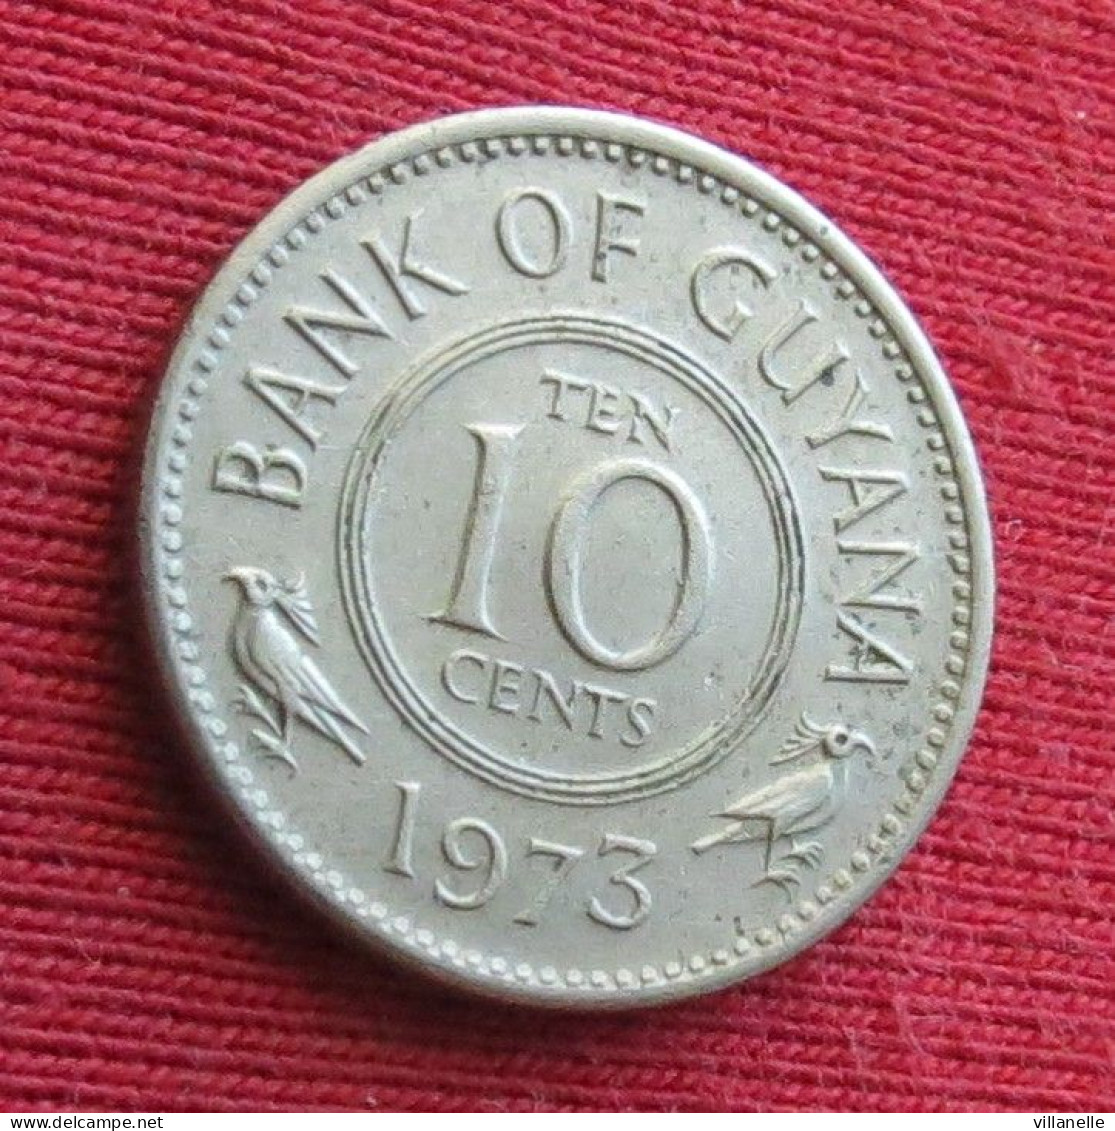 Guyana 10 Cents 1973  Guiana  W ºº - Guyana